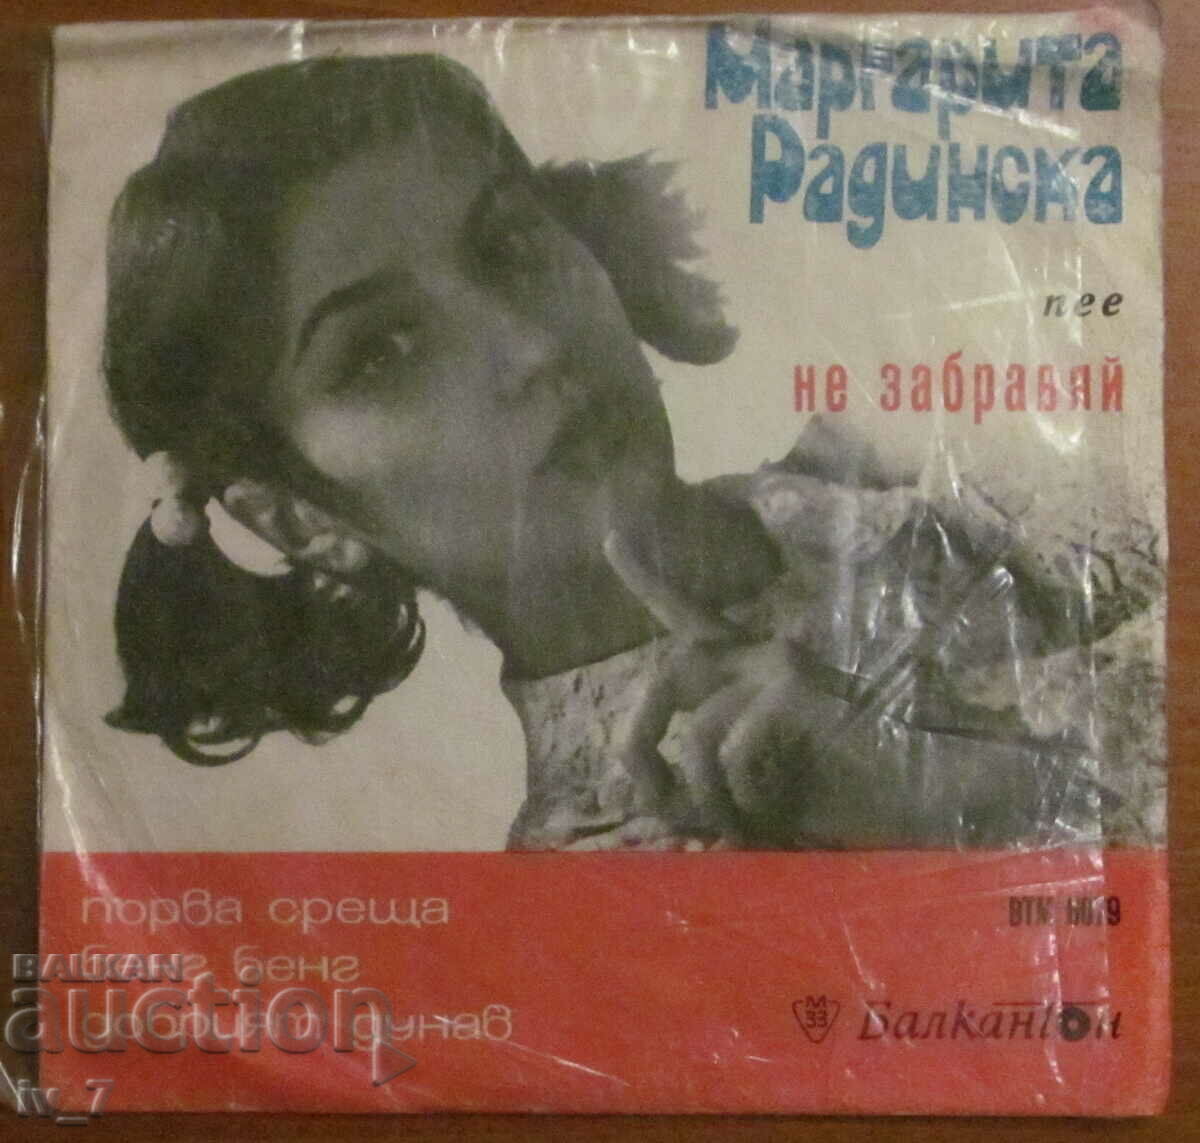 RECORD - MARGARITA RADINSKA, format mic